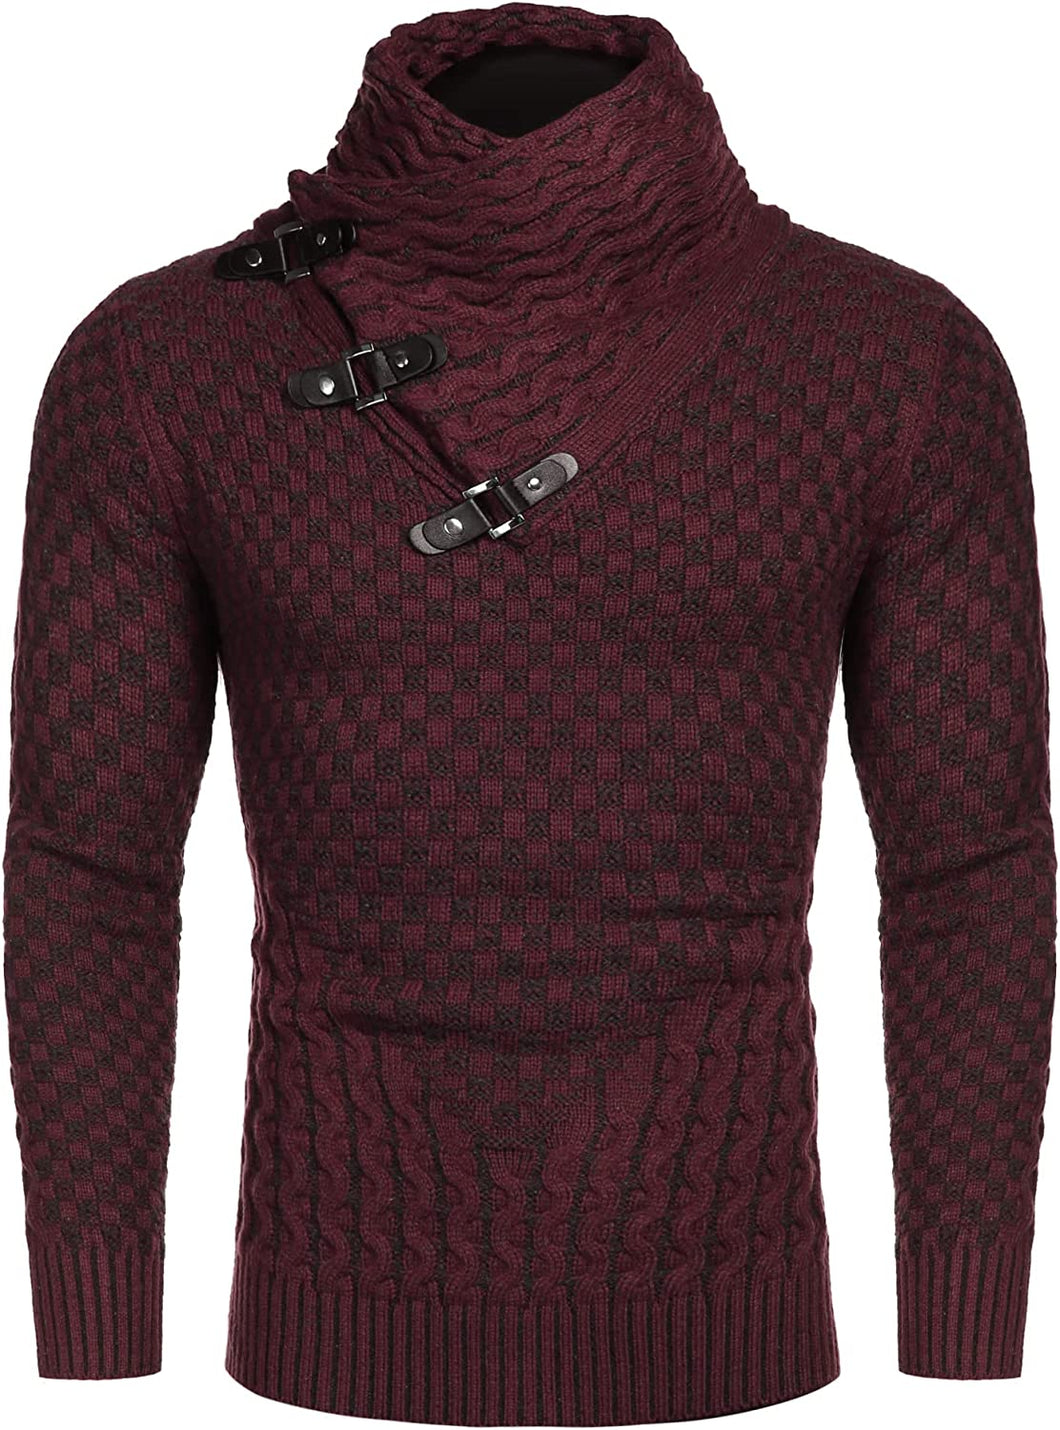 Men's Wine Red Turtle Neck Long Sleeve Slim Fit Sweater